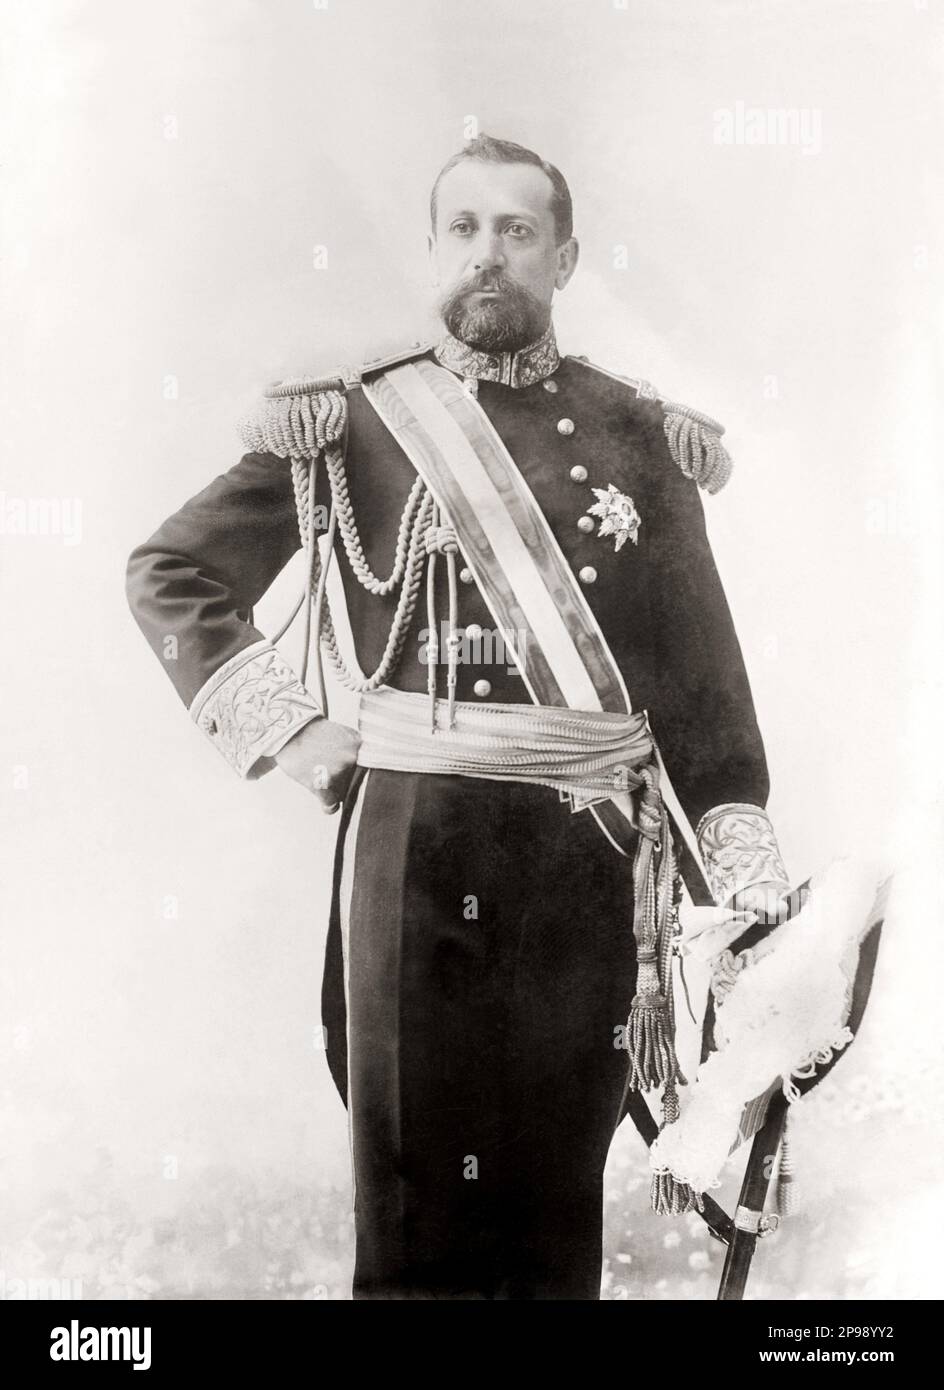 1910 CA : le Prince de Monaco ALBERT I ( 1848 - 1922 ) GRIMALDI . Fils du prince Charles III (1818 - 1889 ), et de la comtesse Antoinette Ghislaine de Merode-Westerloo ( 1828 - 1864 ) - ALBERTO - royalties - nobili - Nobiltà - portrait - ritratto - barbe - barba - uniforme militaire - divisa uniforme militare ---- Archivio GBB Banque D'Images